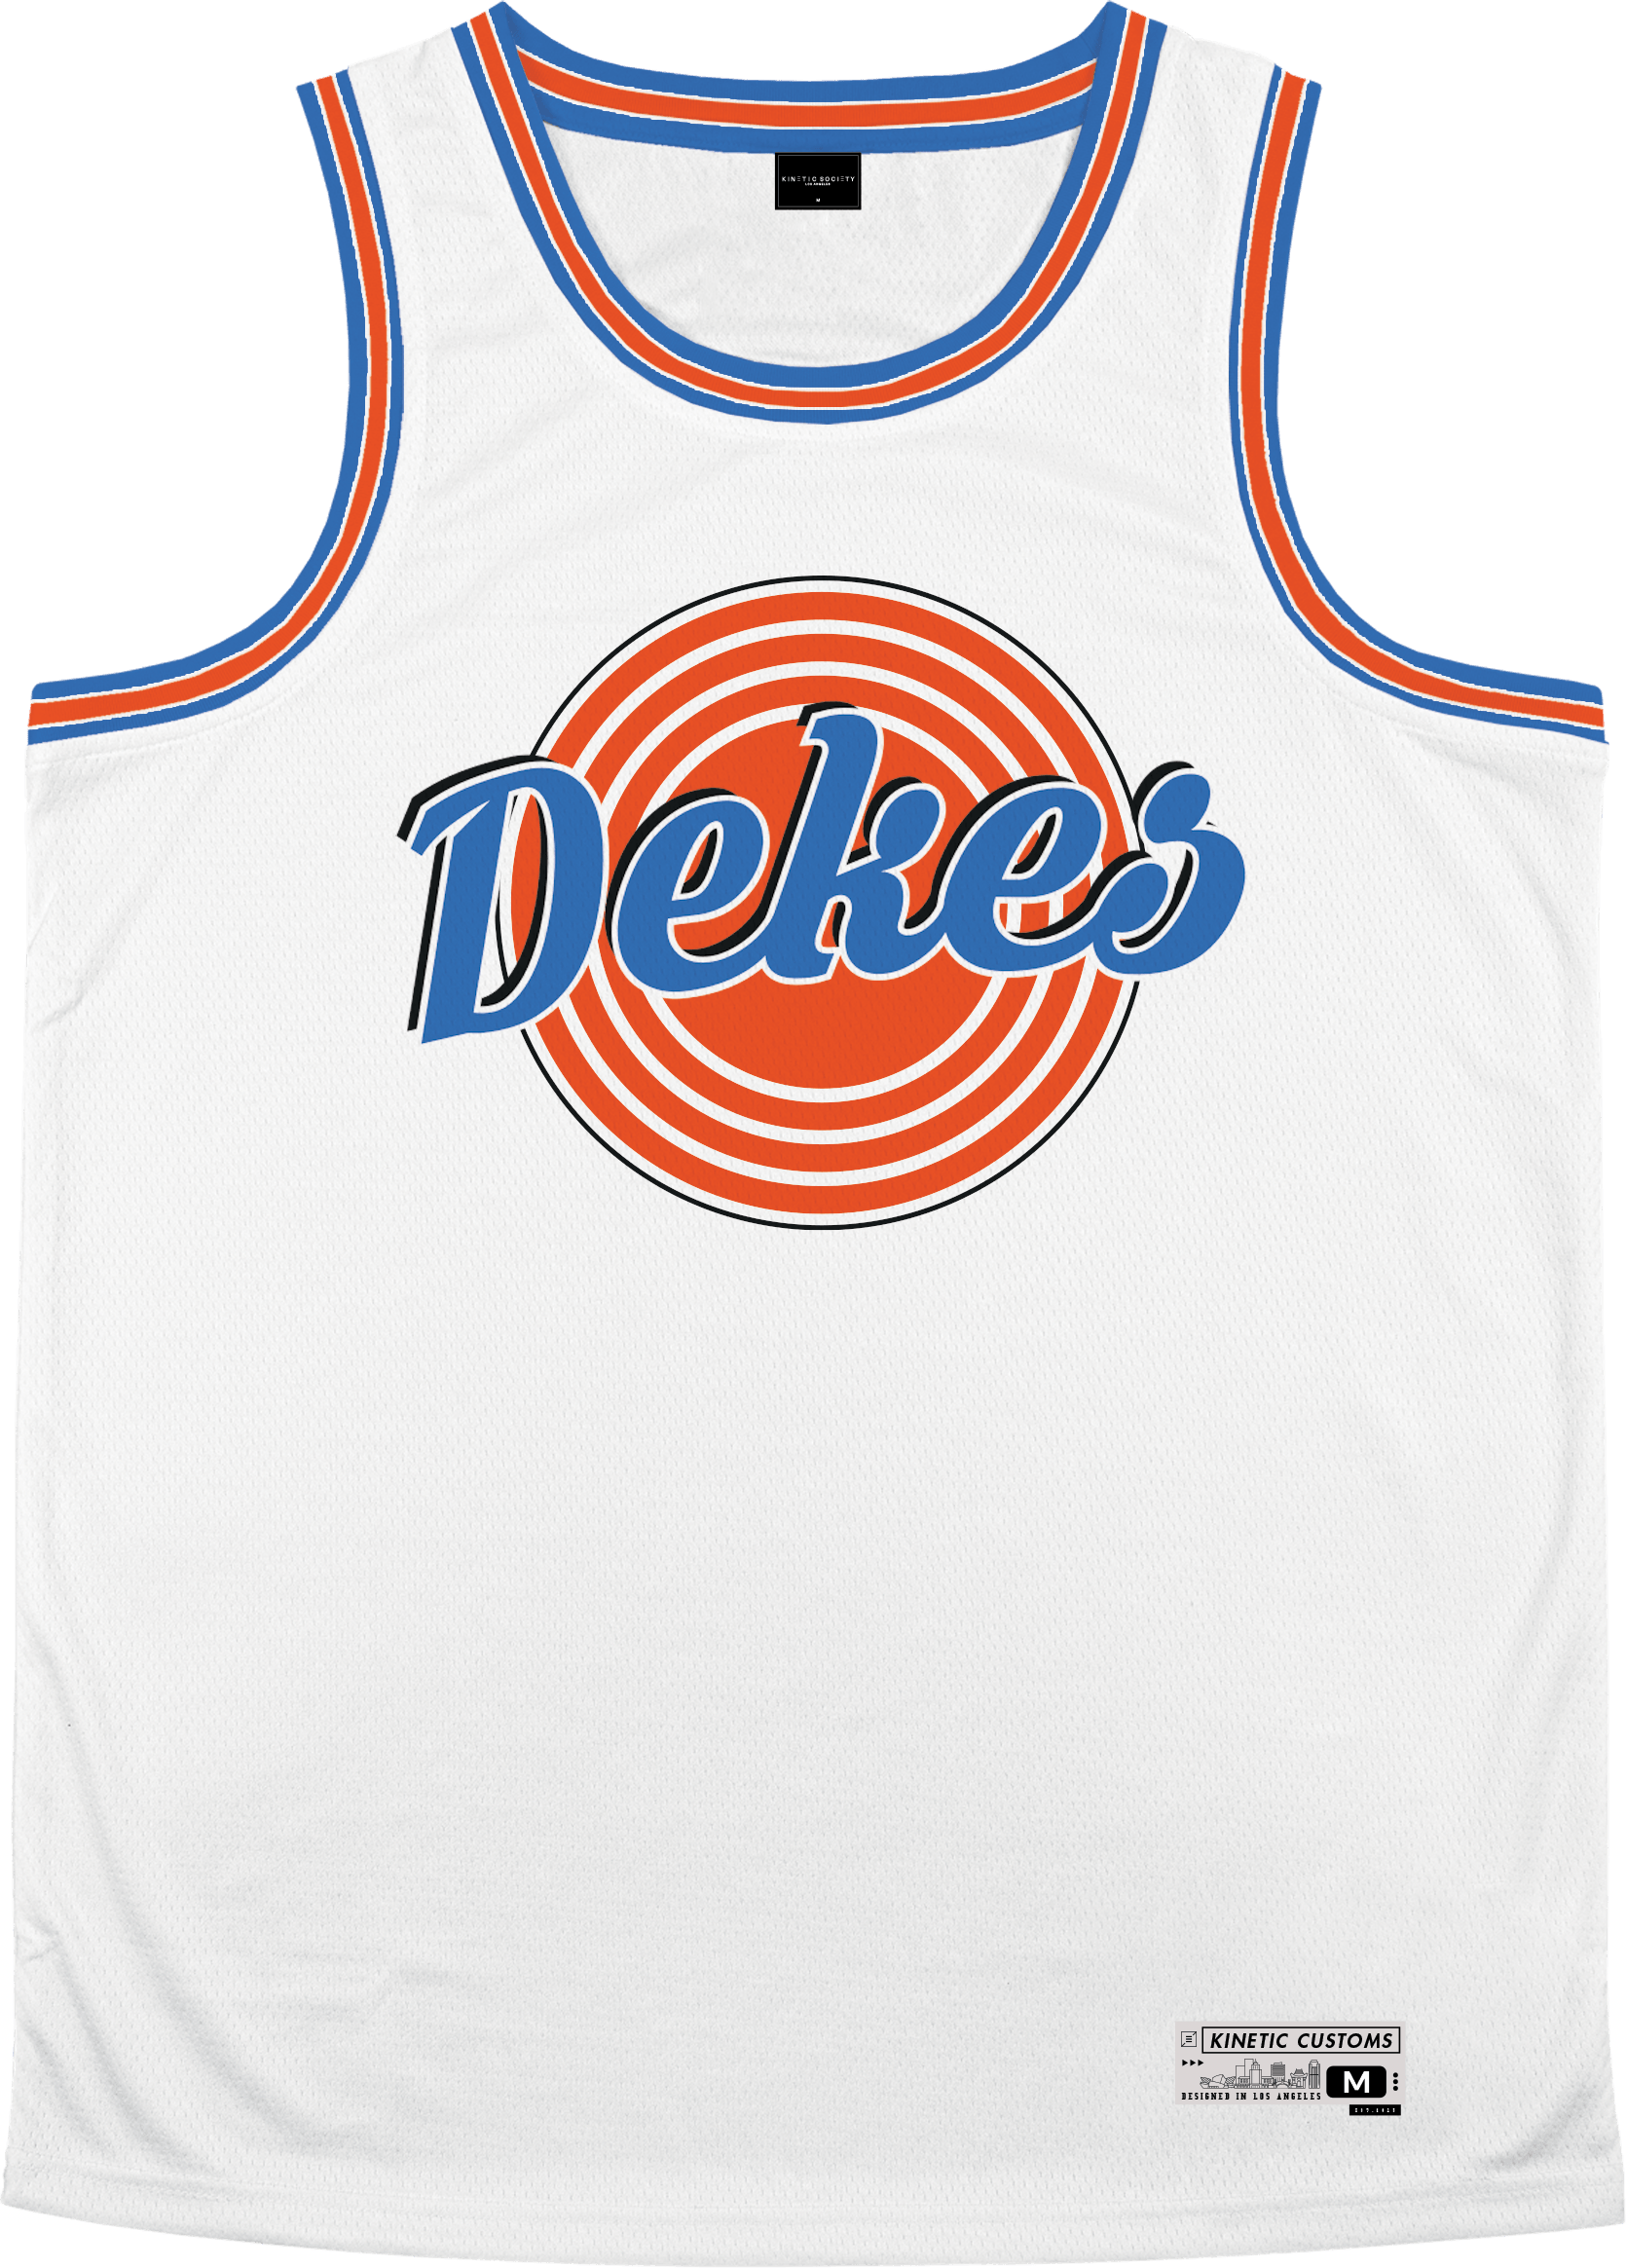 Delta Kappa Epsilon - Vintage Basketball Jersey - Kinetic Society